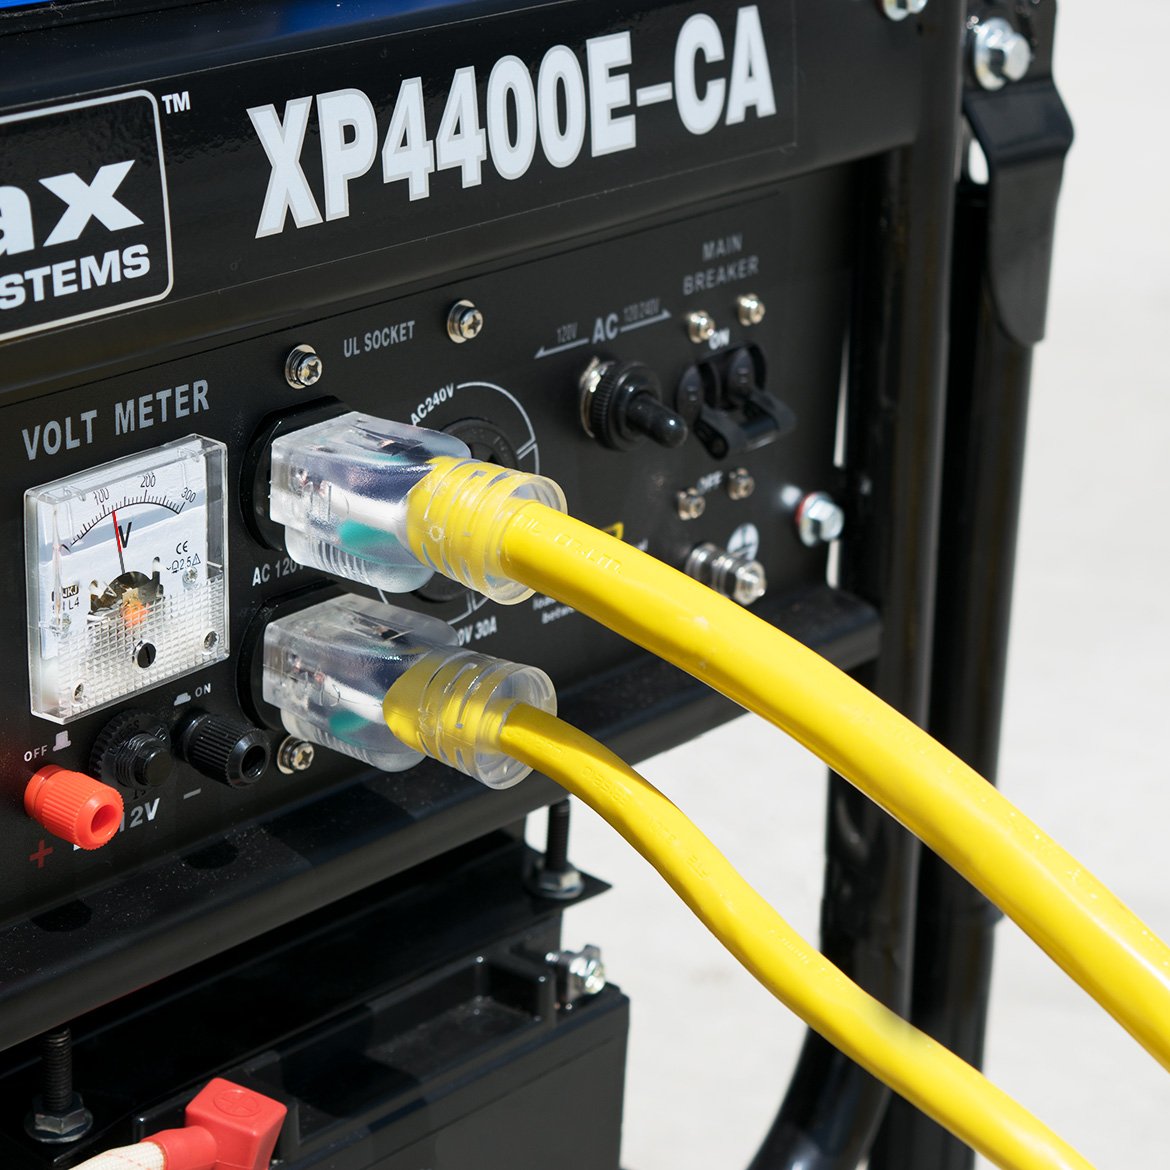 DuroMax XPC10050C 50-Foot 10 Gauge Triple Tap Extension Power Cord.